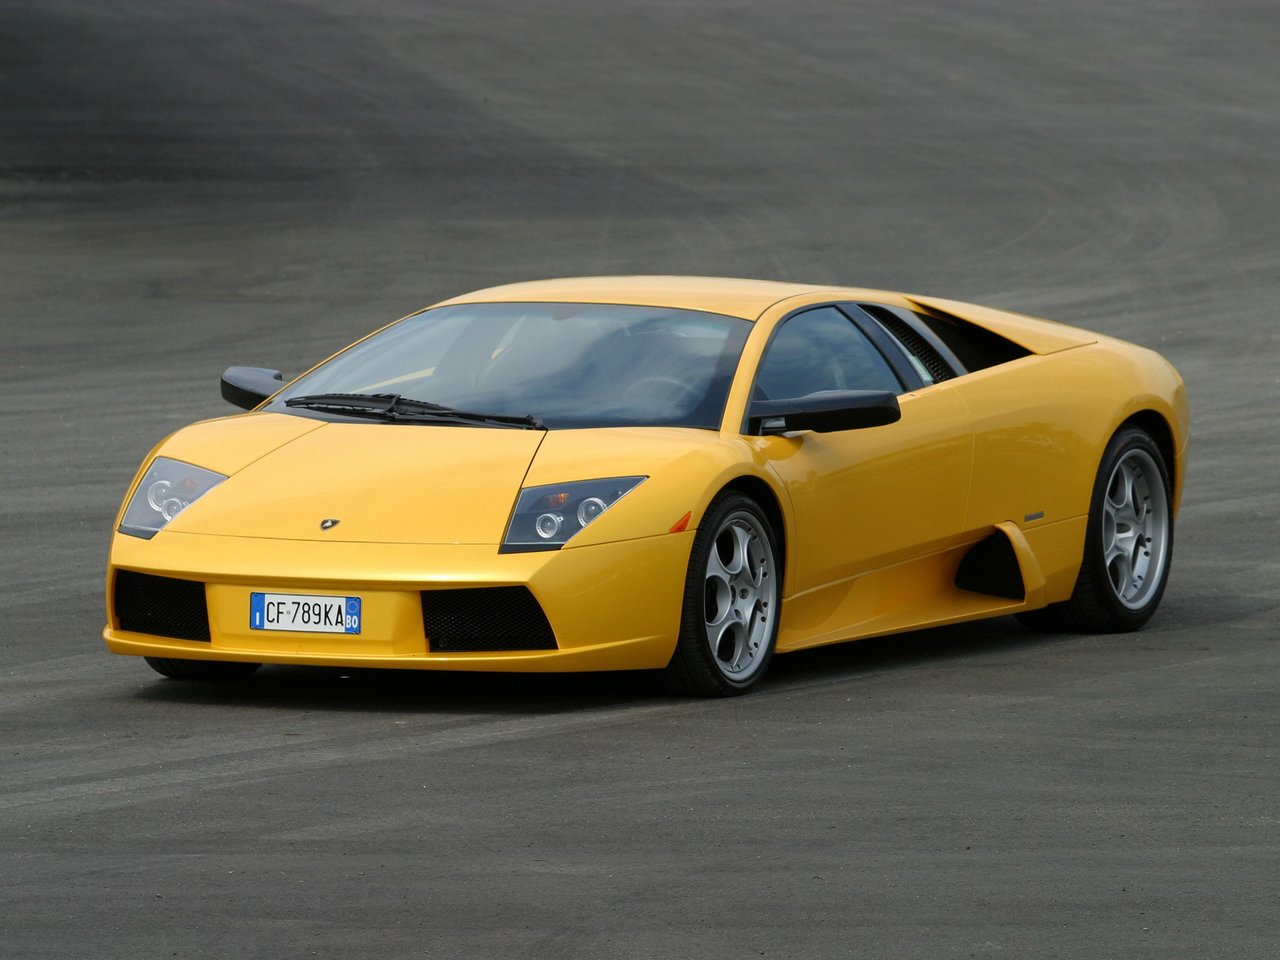 Расход газа двух комплектаций купе Lamborghini Murcielago. Разница стоимости заправки газом и бензином. Автономный пробег до и после установки ГБО.